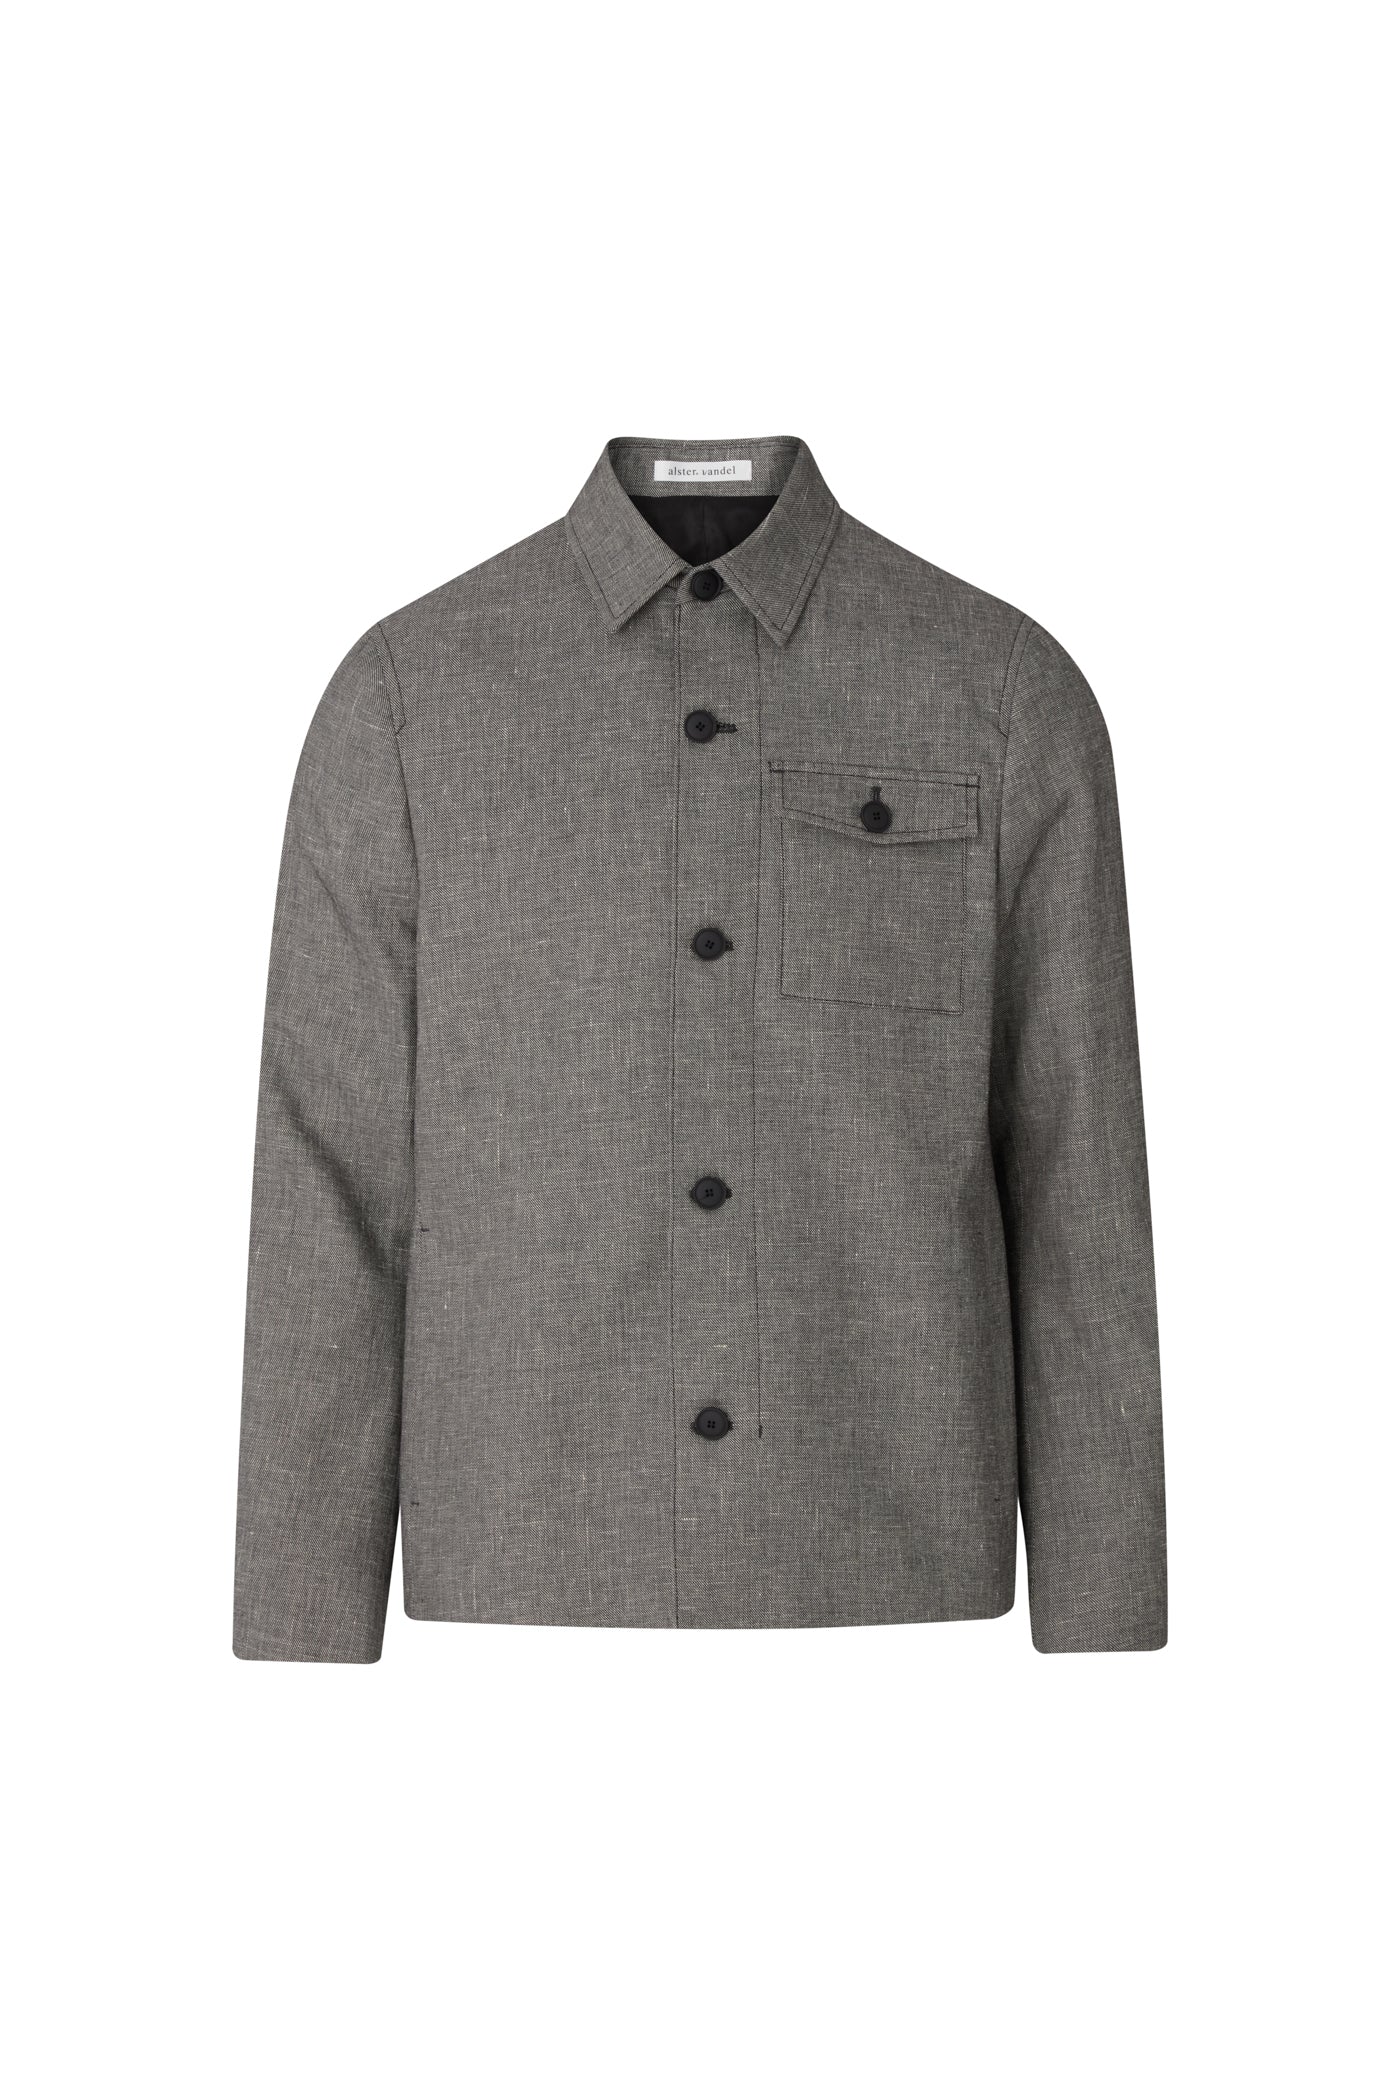 Stone cotton linen jacket